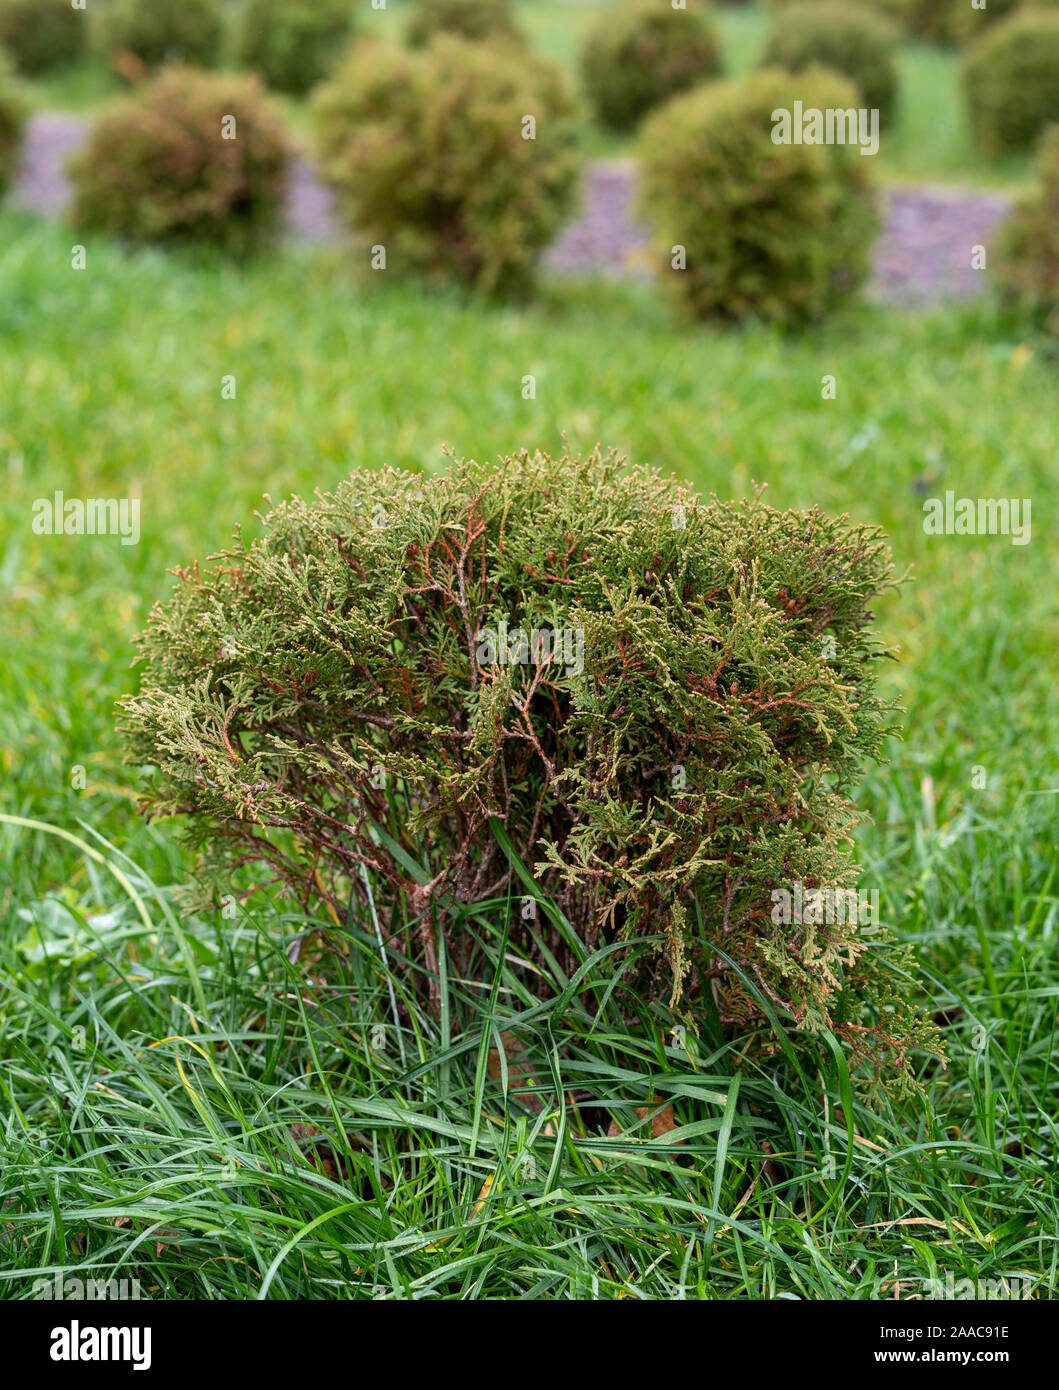 landscape design. evergreen conifers - thuja bushes on a green lawn. Stock Photo